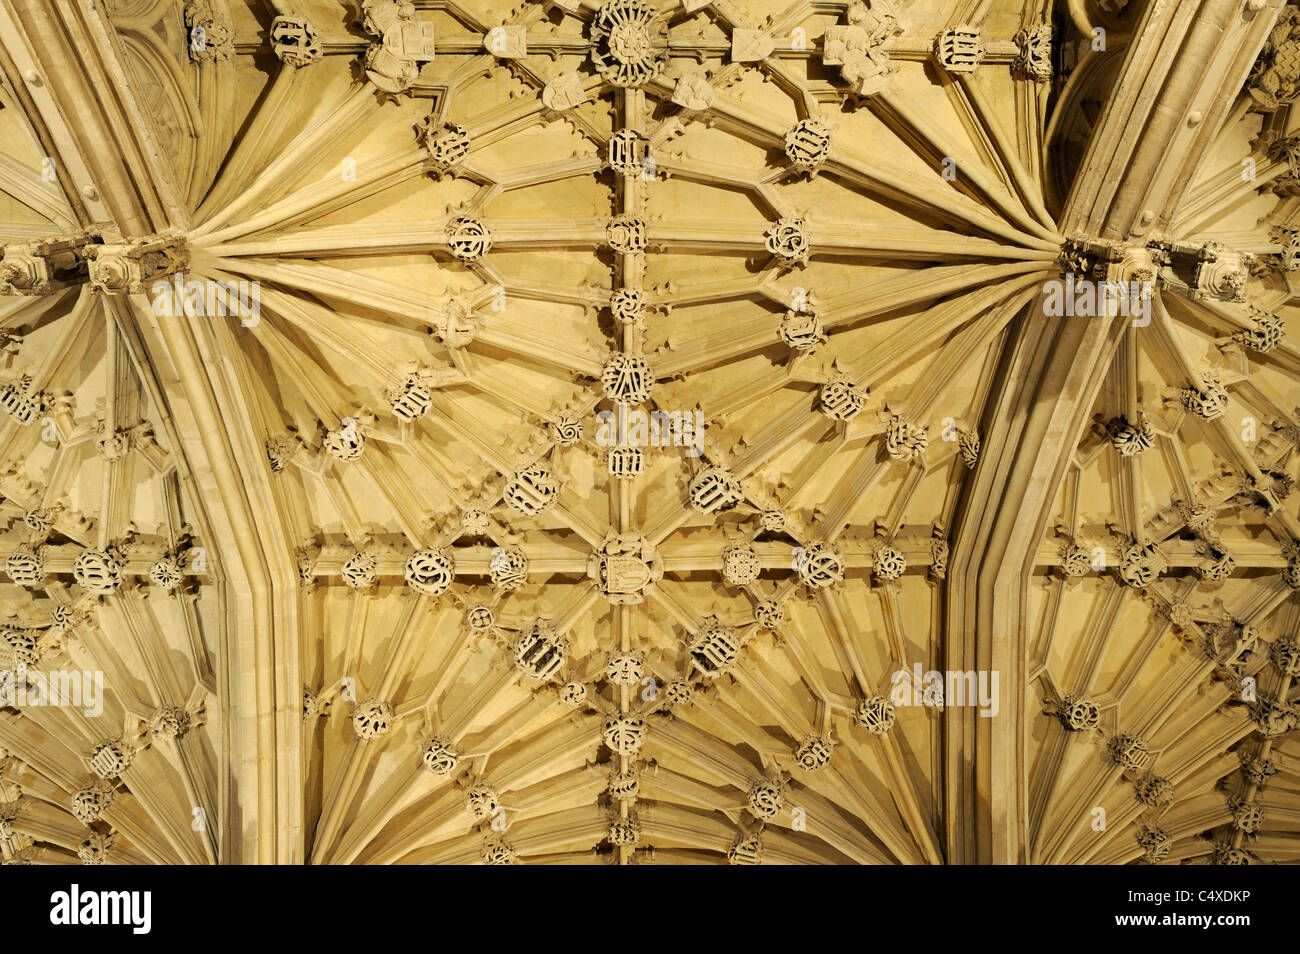 Plafond de la Divinity School, Oxford - Angleterre Banque D'Images